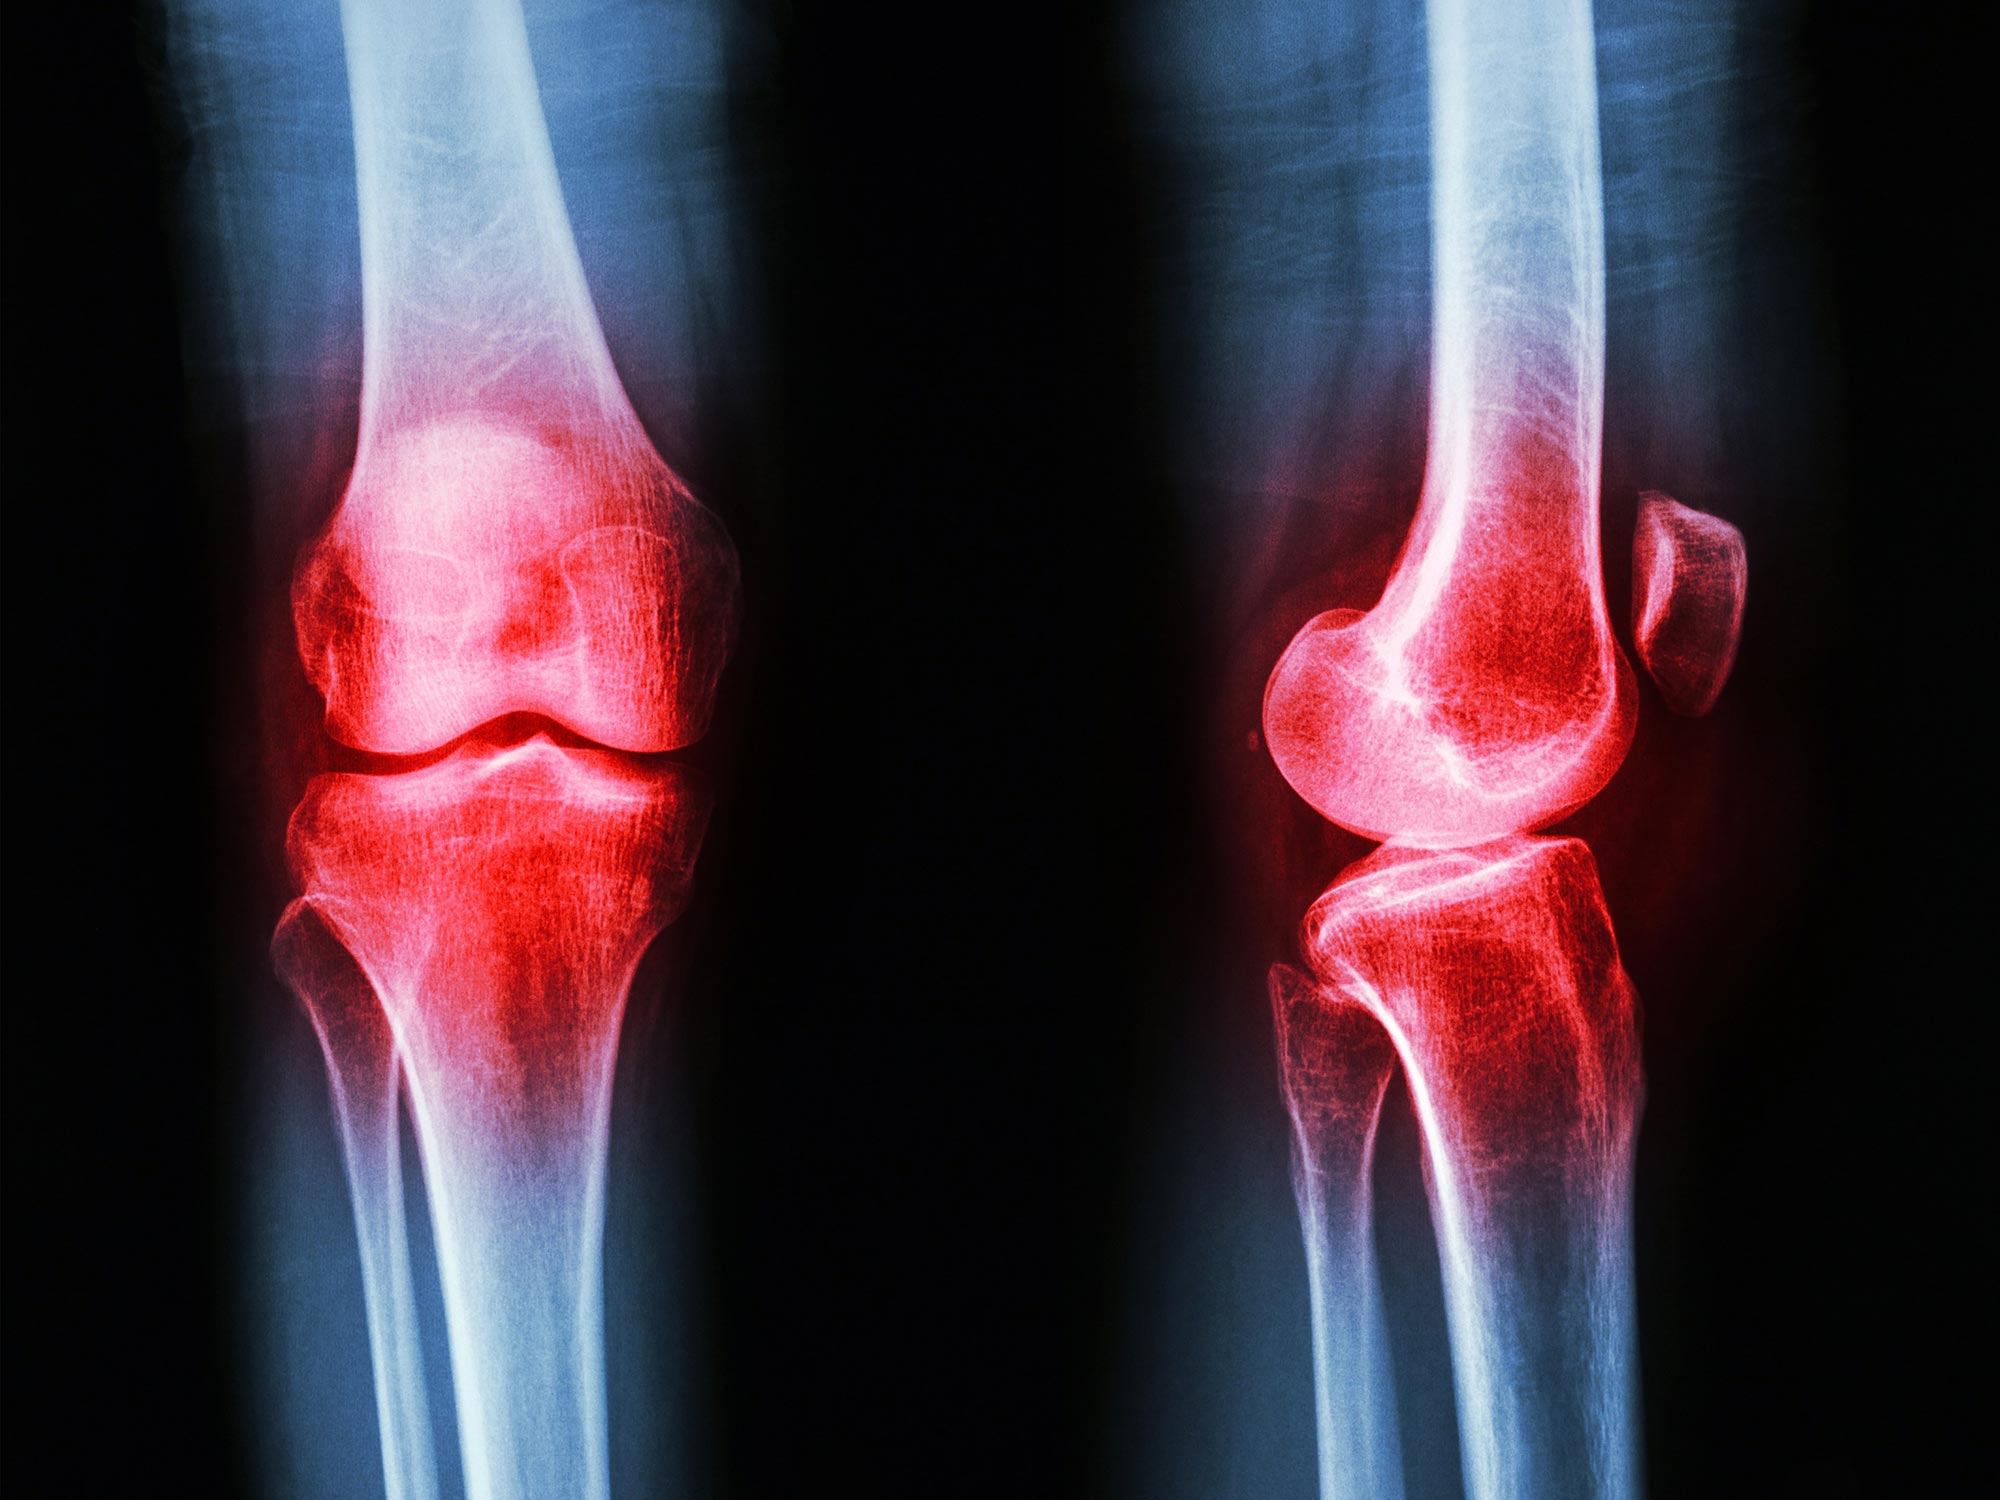 Common Arthritis Treatment May Actually Accelerate Disease Progression